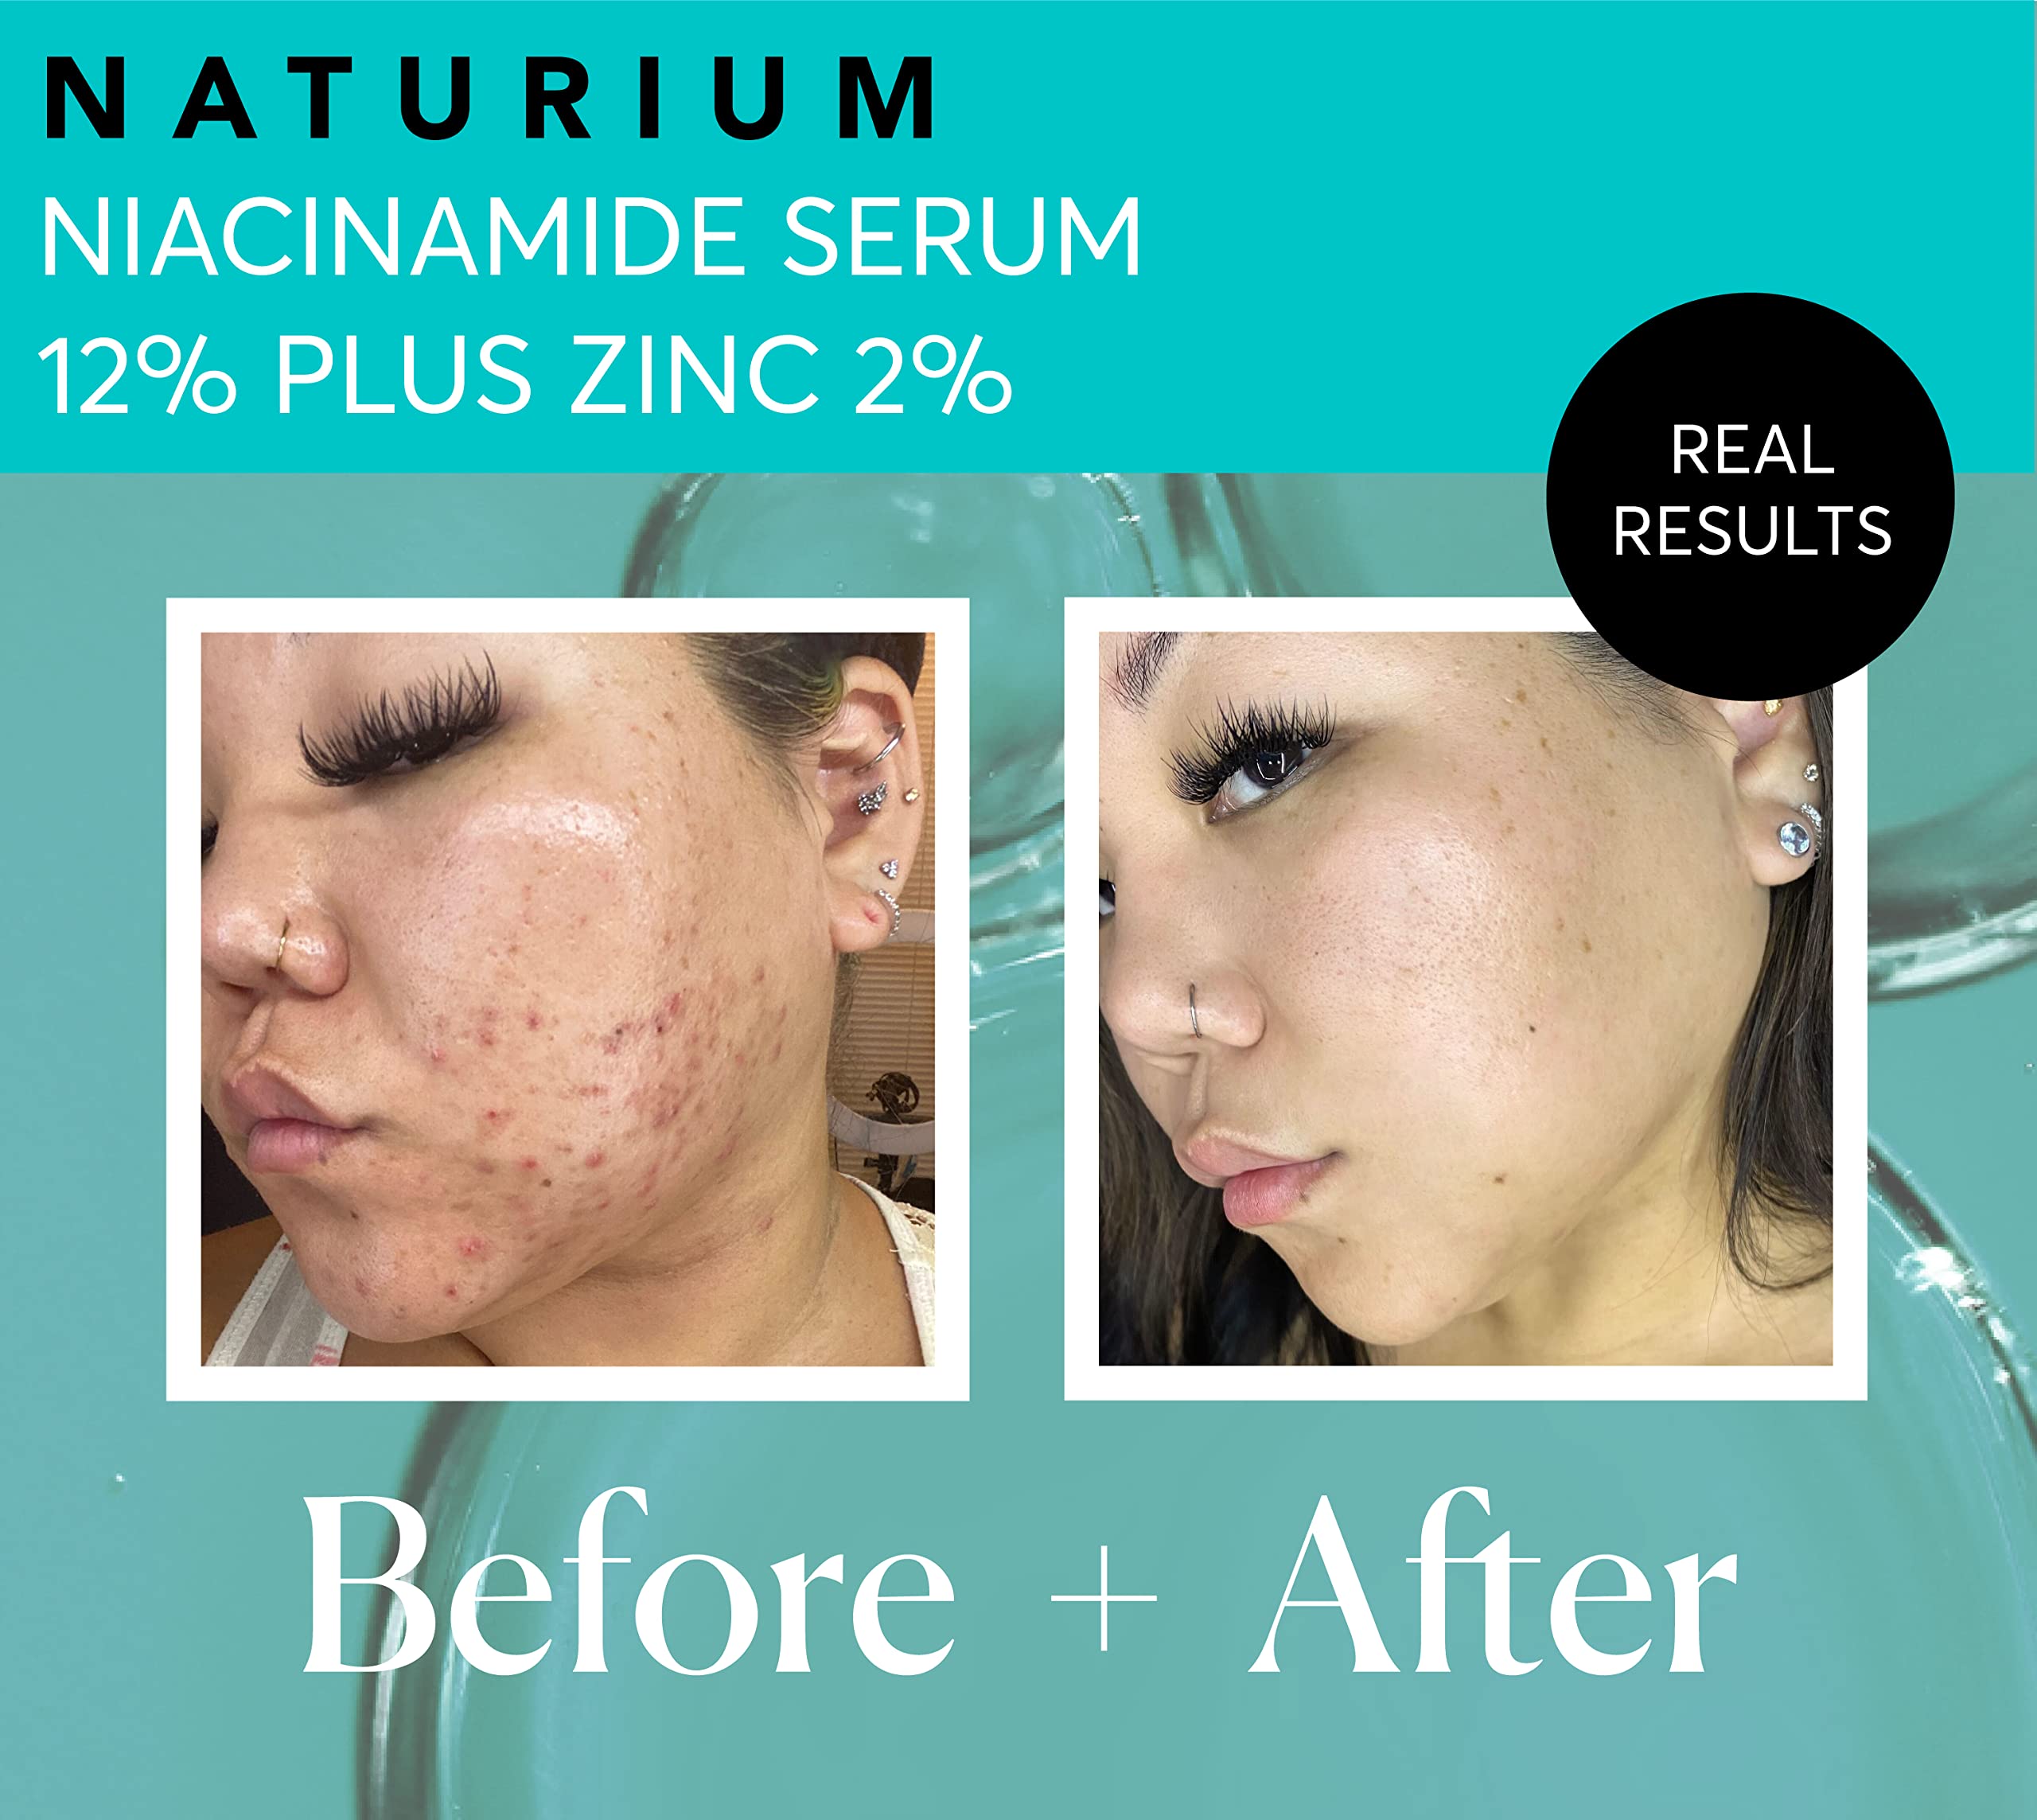 Naturium Niacinamide Face Serum 12% Plus Zinc 2%, Skin Complexion Treatment & Pore Minimizer, with Hyaluronic Acid & Vitamin E, 